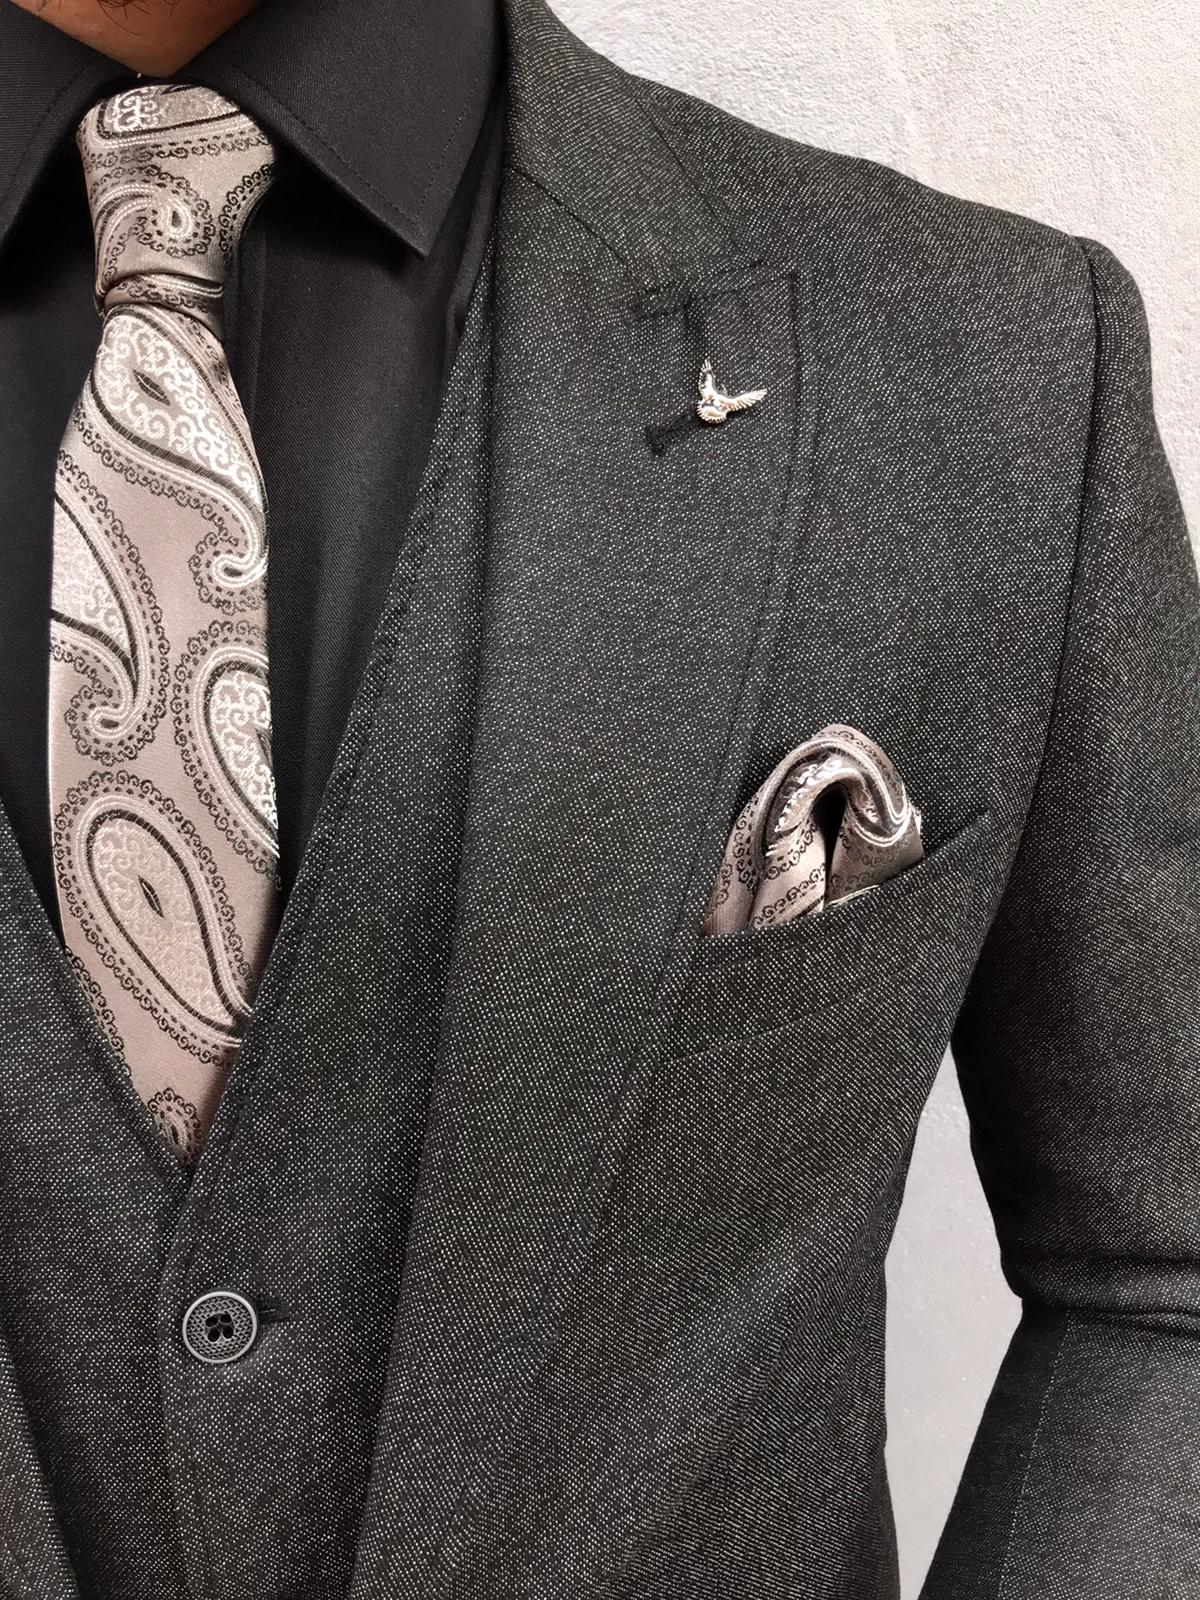 Buy Black Slim Fit Suit by BespokeDailyShop.com | Worldwide Shipping